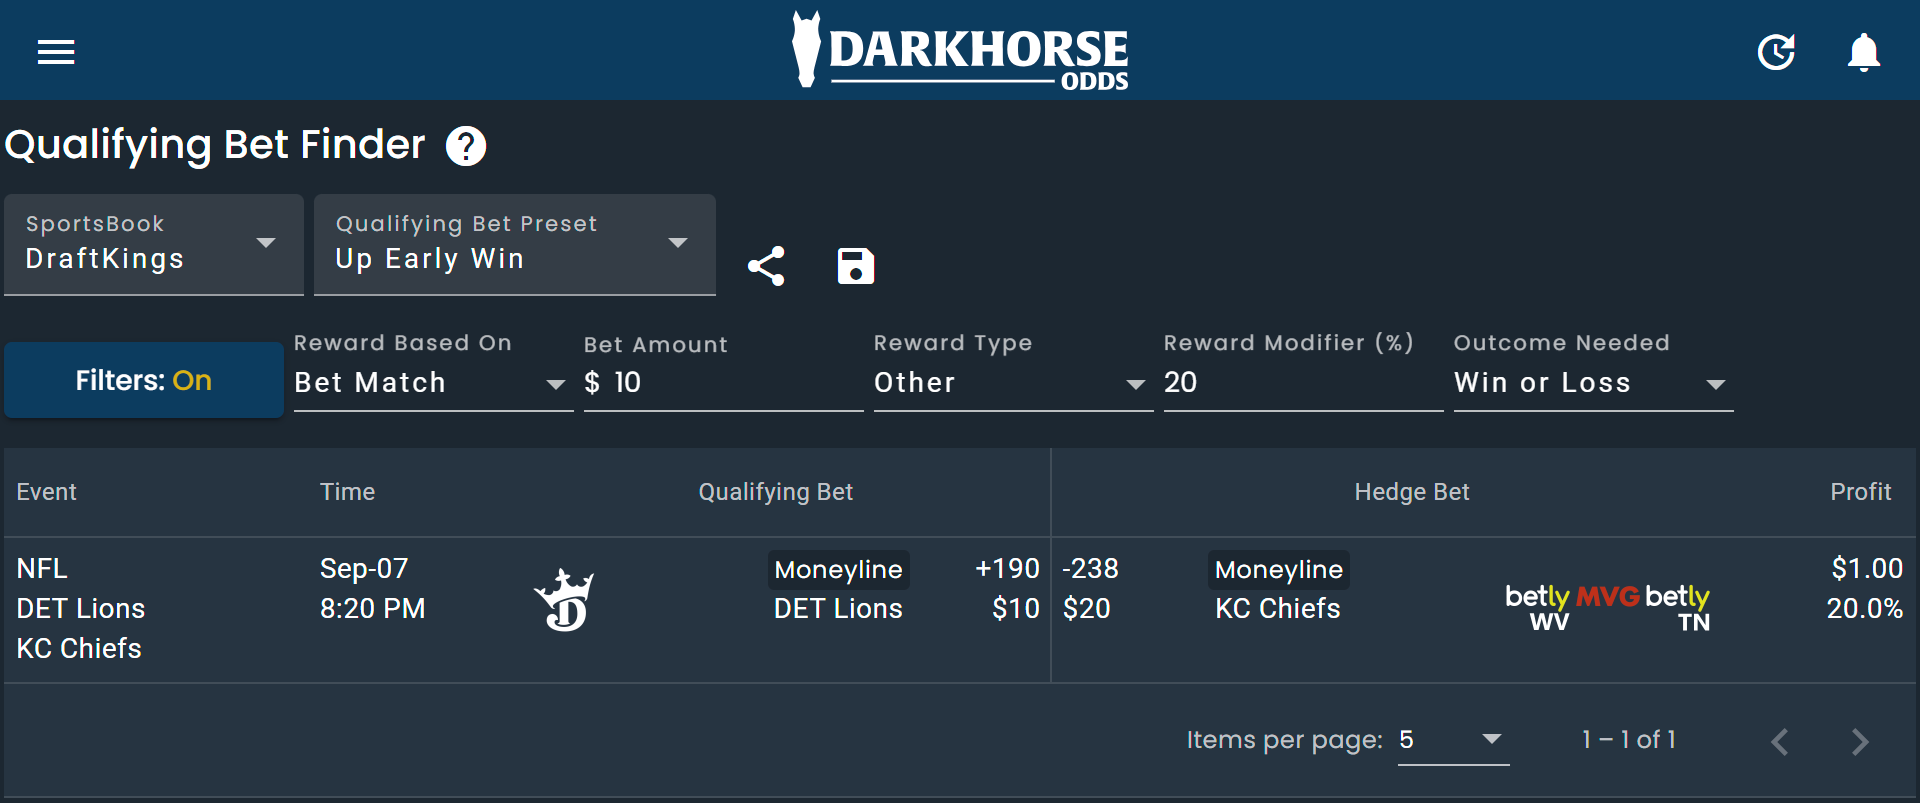 Screenshot of the DarkHorse Odds Qualifying Bet Finder